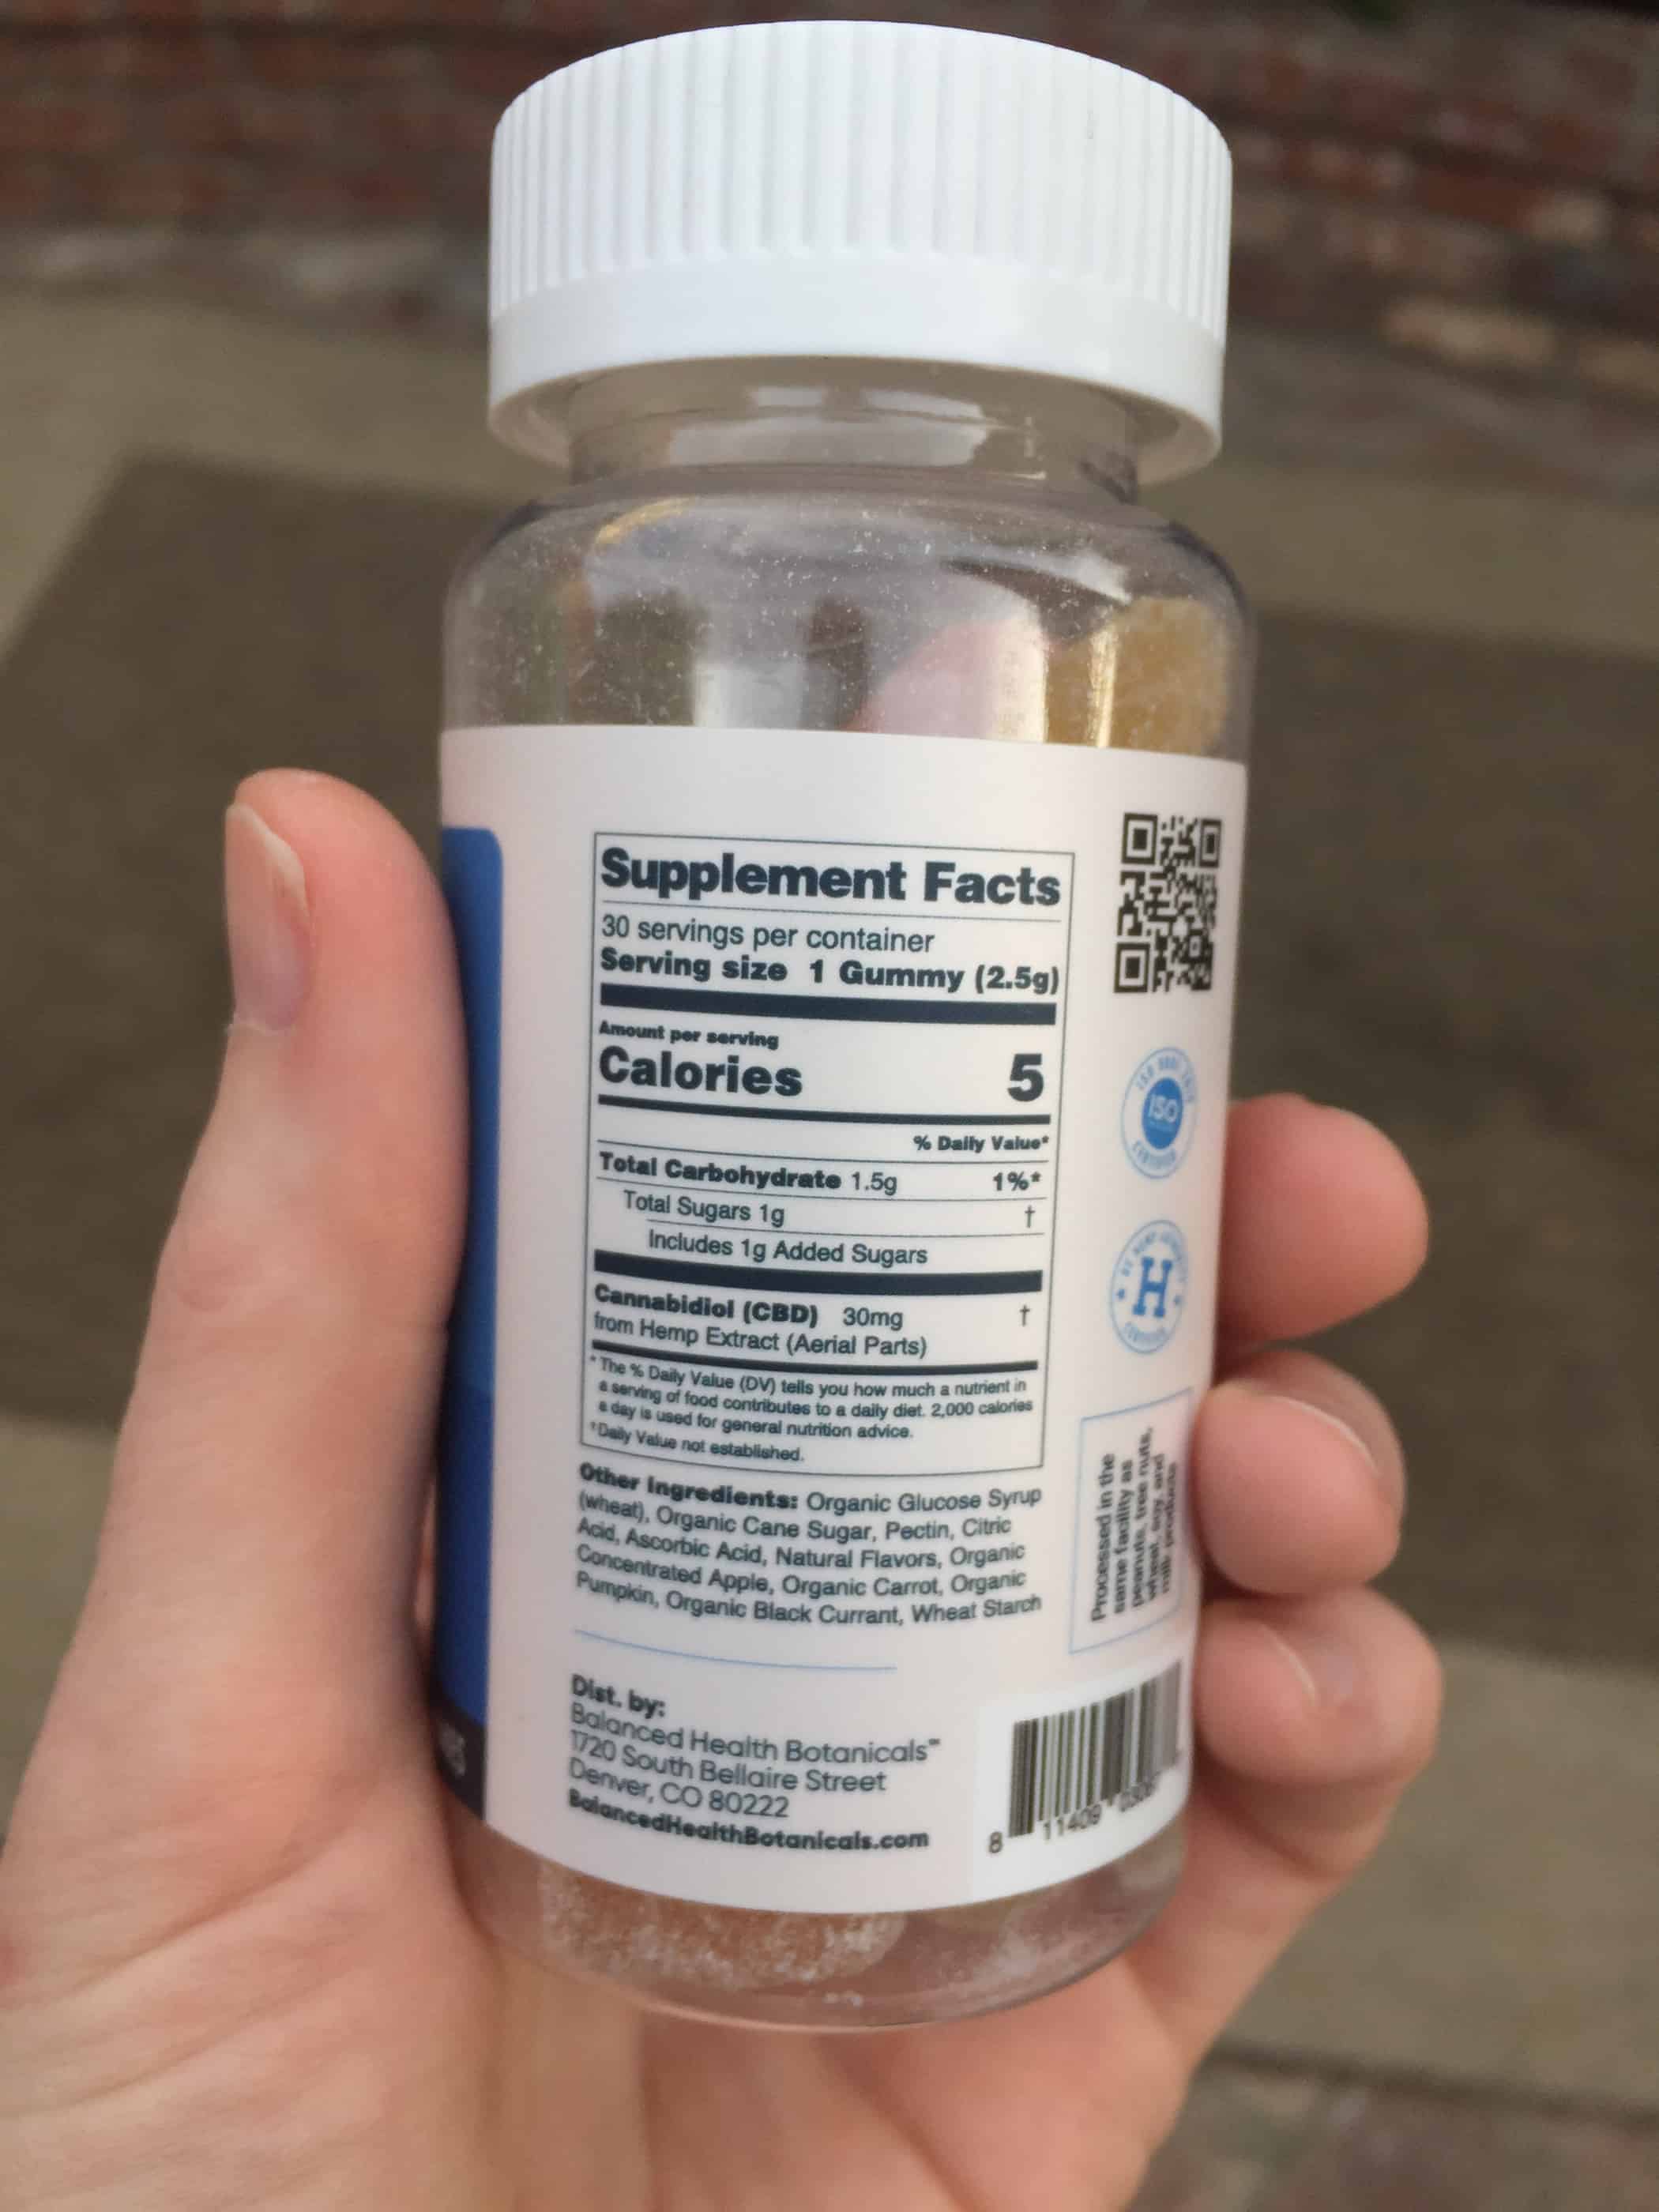 cbdistillery cbd isolate vegan gummies save on cannabis specifications